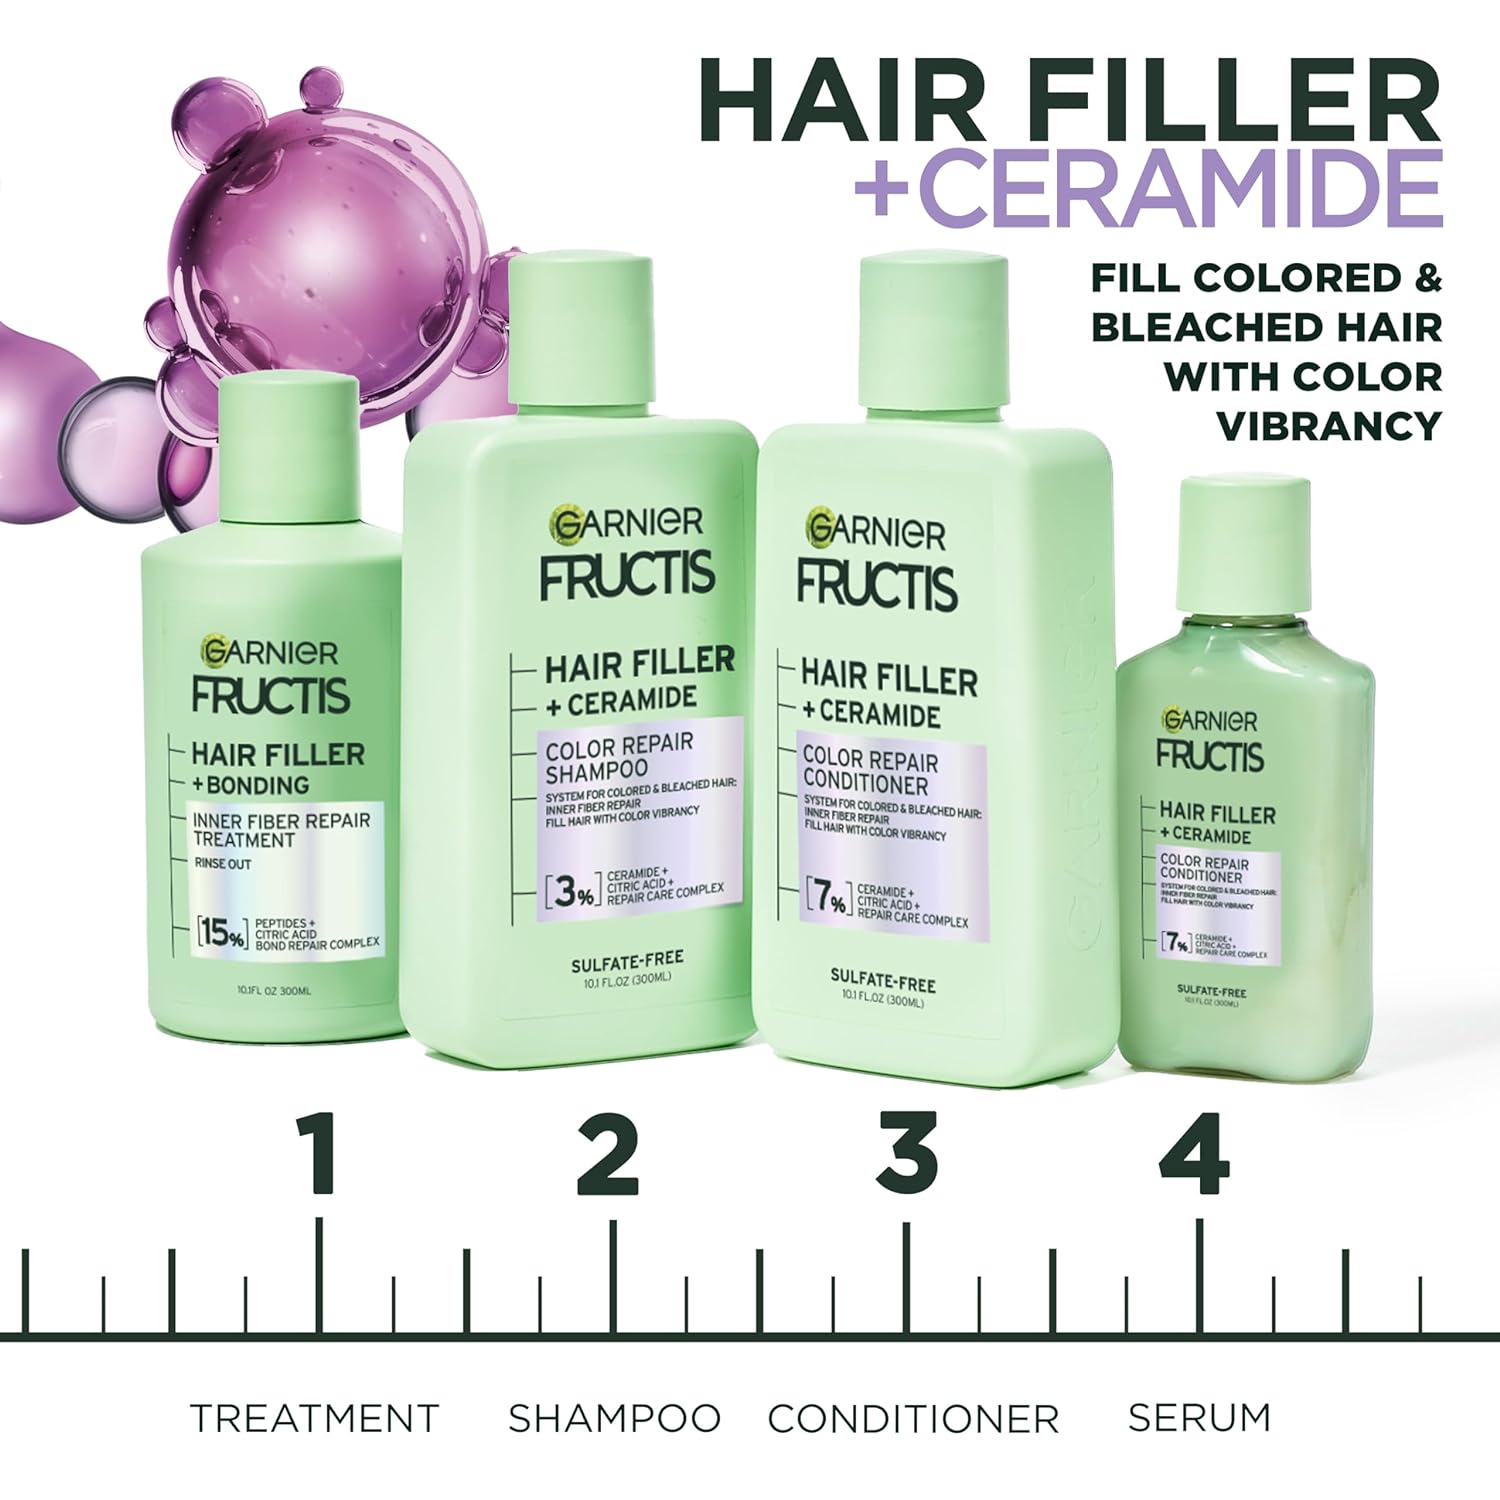 Garnier Fructis Hair Filler Color Repair Serum with Ceramide, 3.8 FL OZ, 1 Count : Beauty & Personal Care